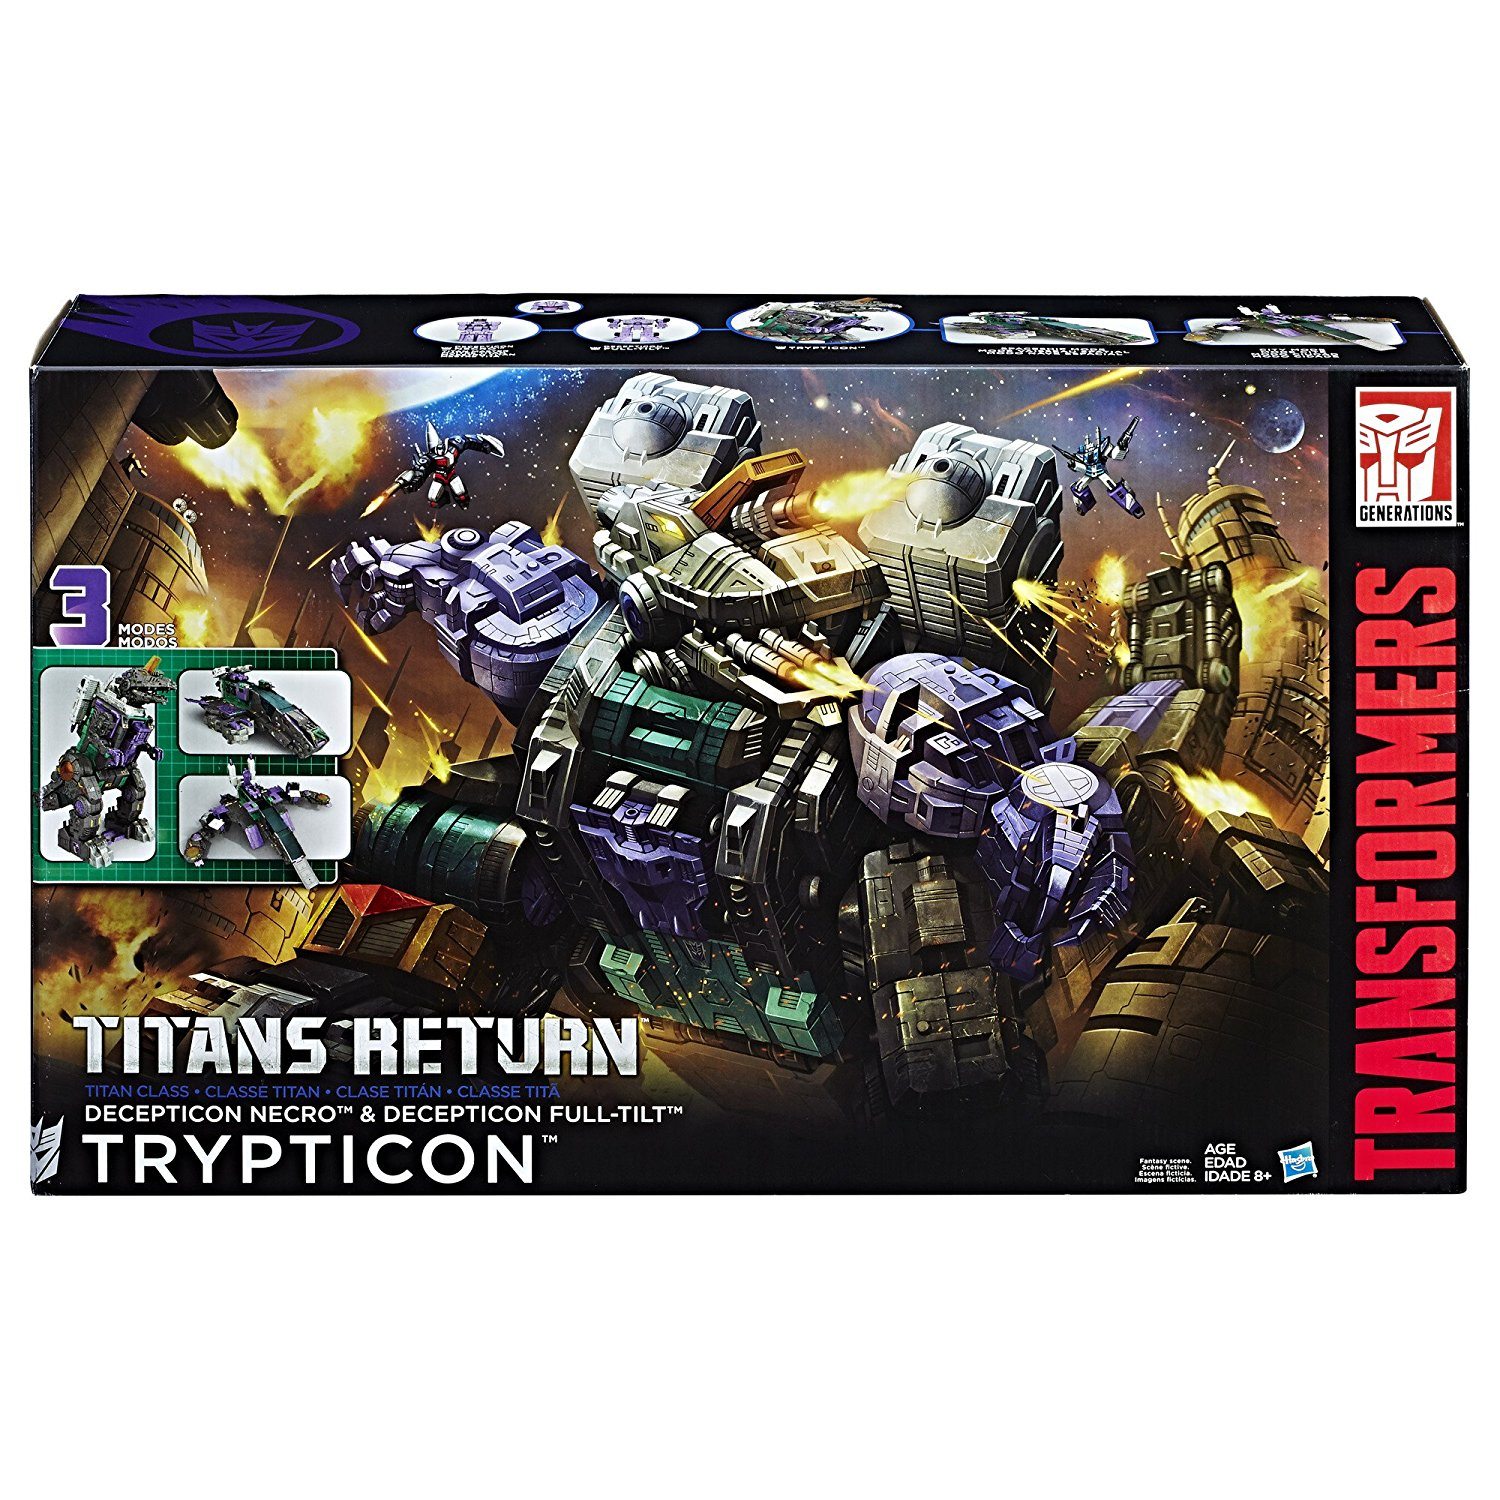 Trypticon!  Image: Hasbro